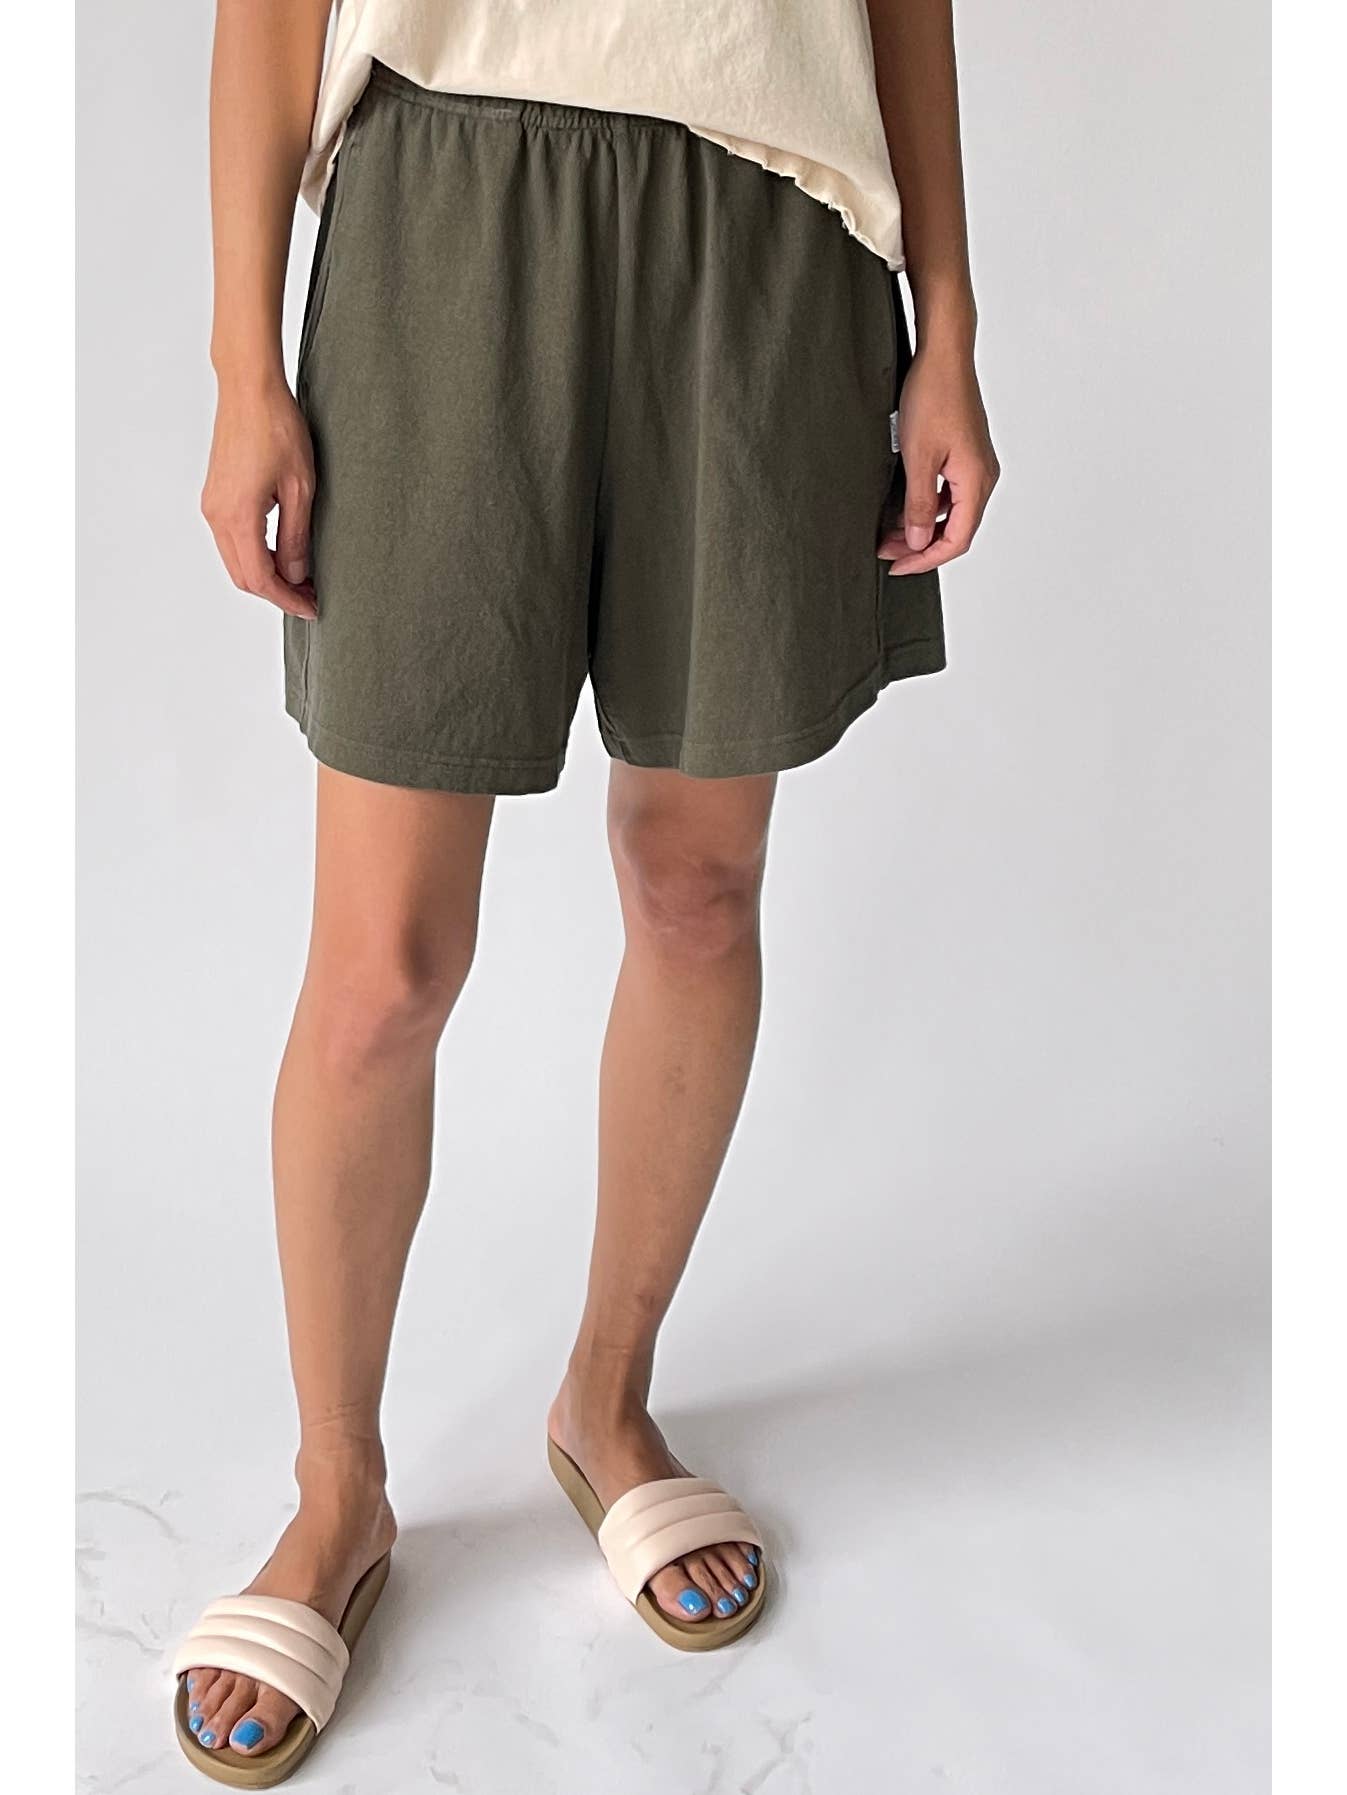 Le bon shoppe flared basketball shorts in olive green